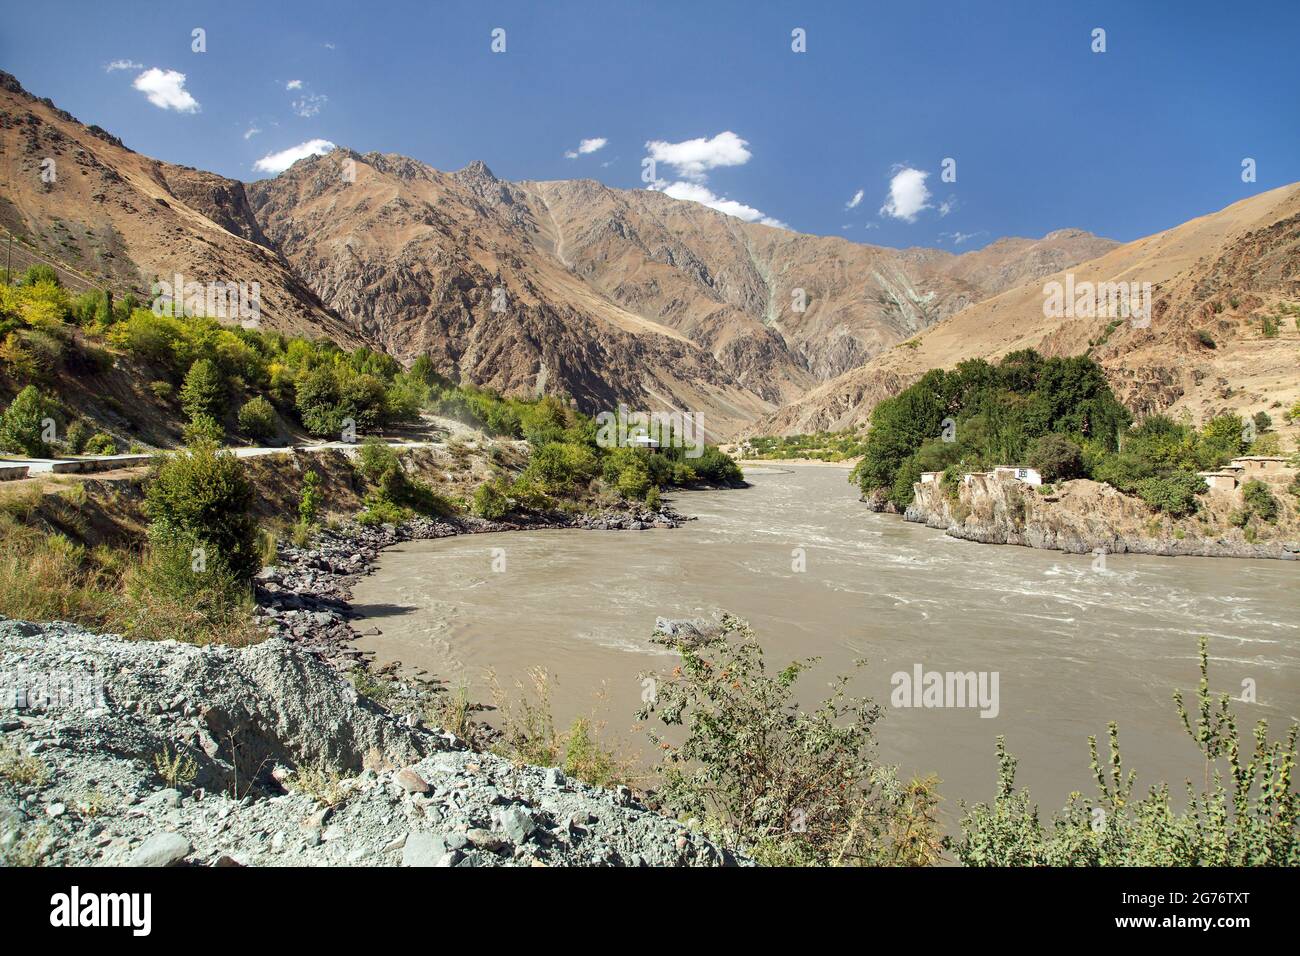 Fiume Panj e monti Pamir. Panj è la parte superiore del fiume Amu Darya. Vista panoramica. Tagikistan e confine con l'Afghanistan. Autostrada di Pamir Foto Stock